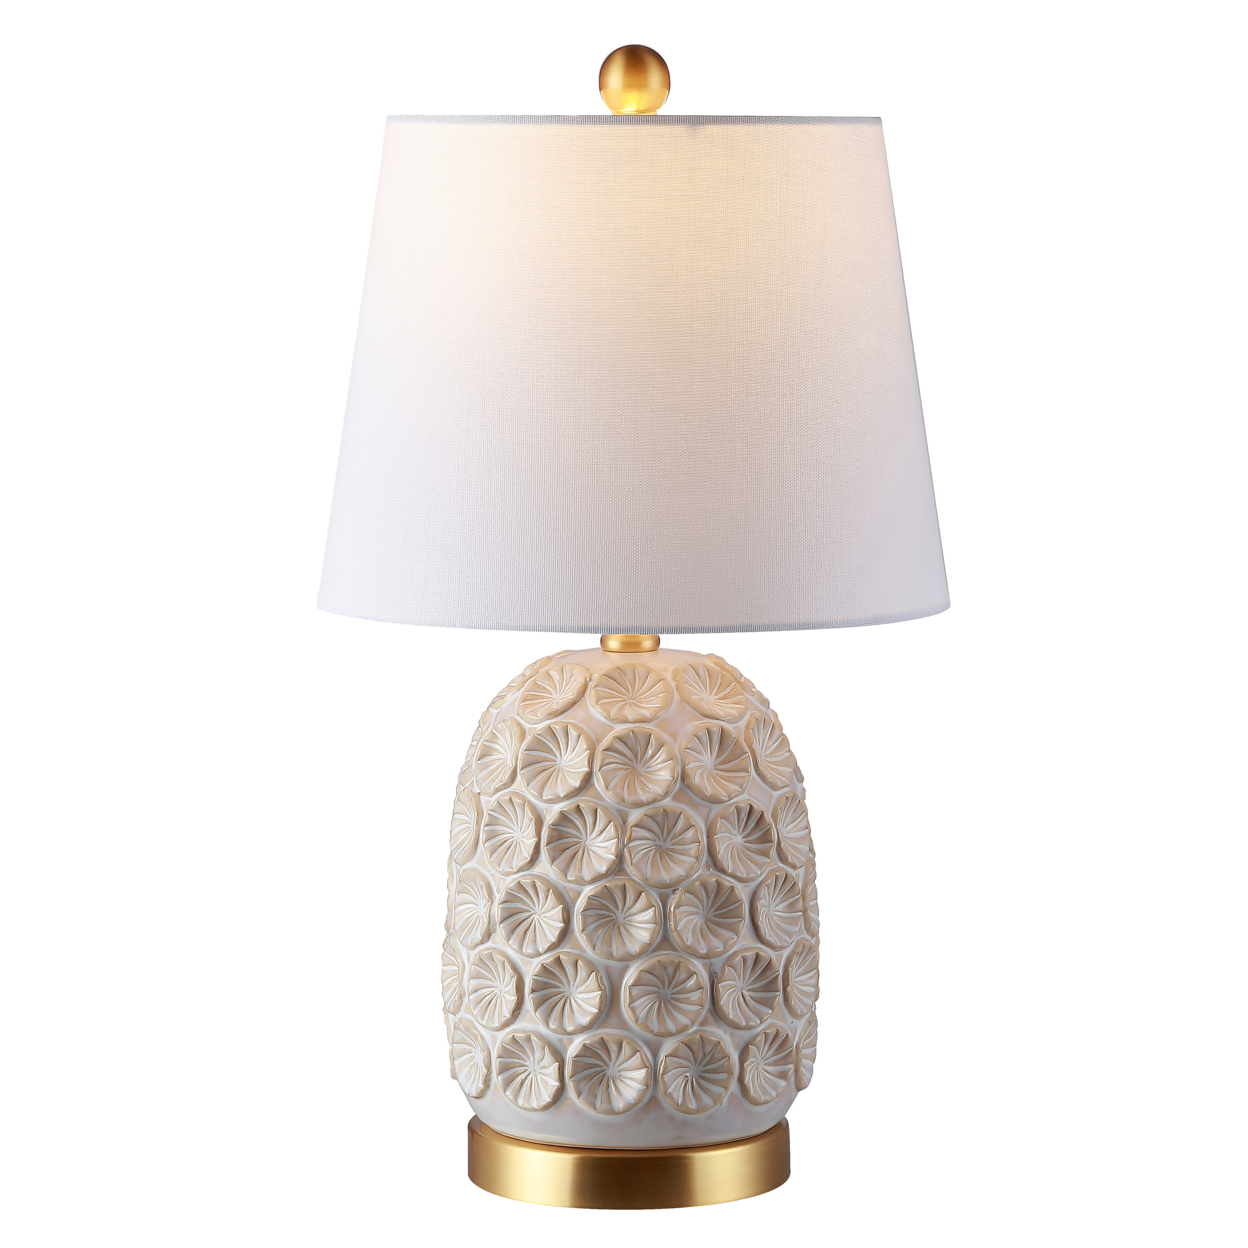 SAFAVIEH Lamson Table Lamp , White / Gold ,